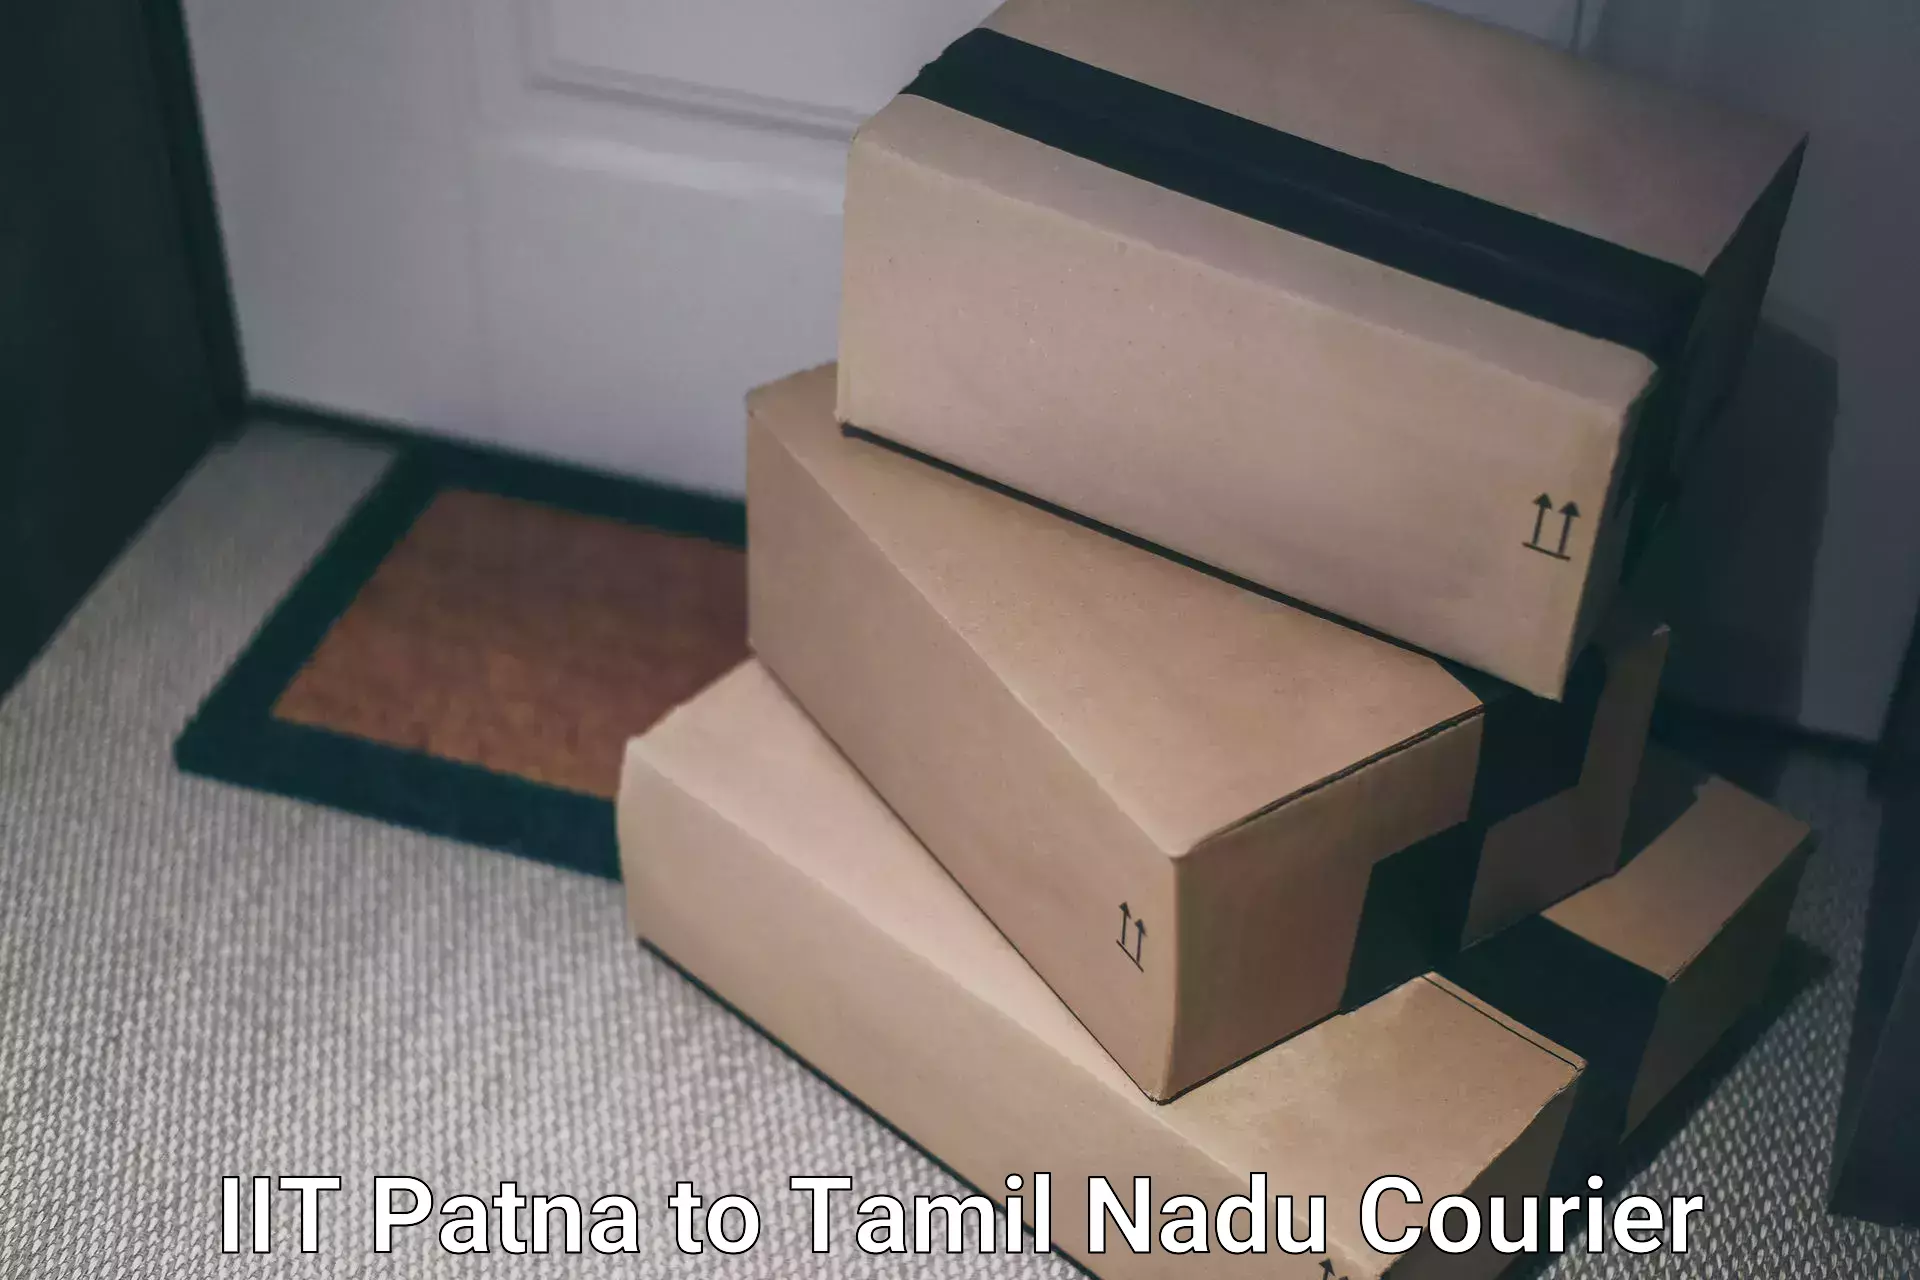 Rapid freight solutions IIT Patna to Tamil Nadu